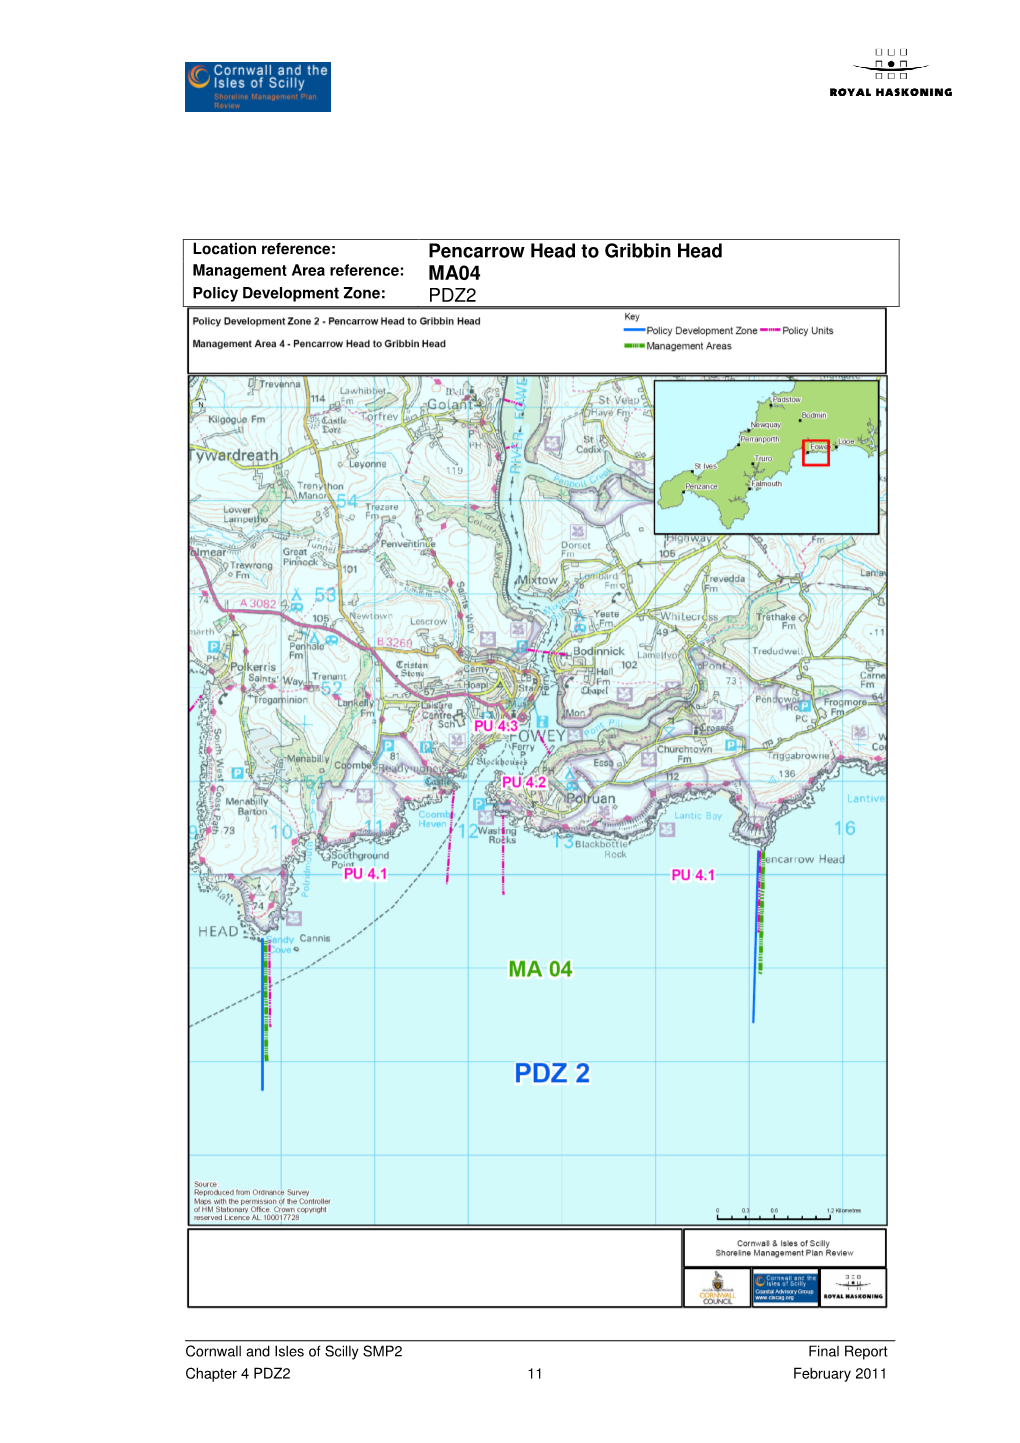 Pencarrow Head to Gribbin Head Management Area Reference: MA04 Policy Development Zone: PDZ2